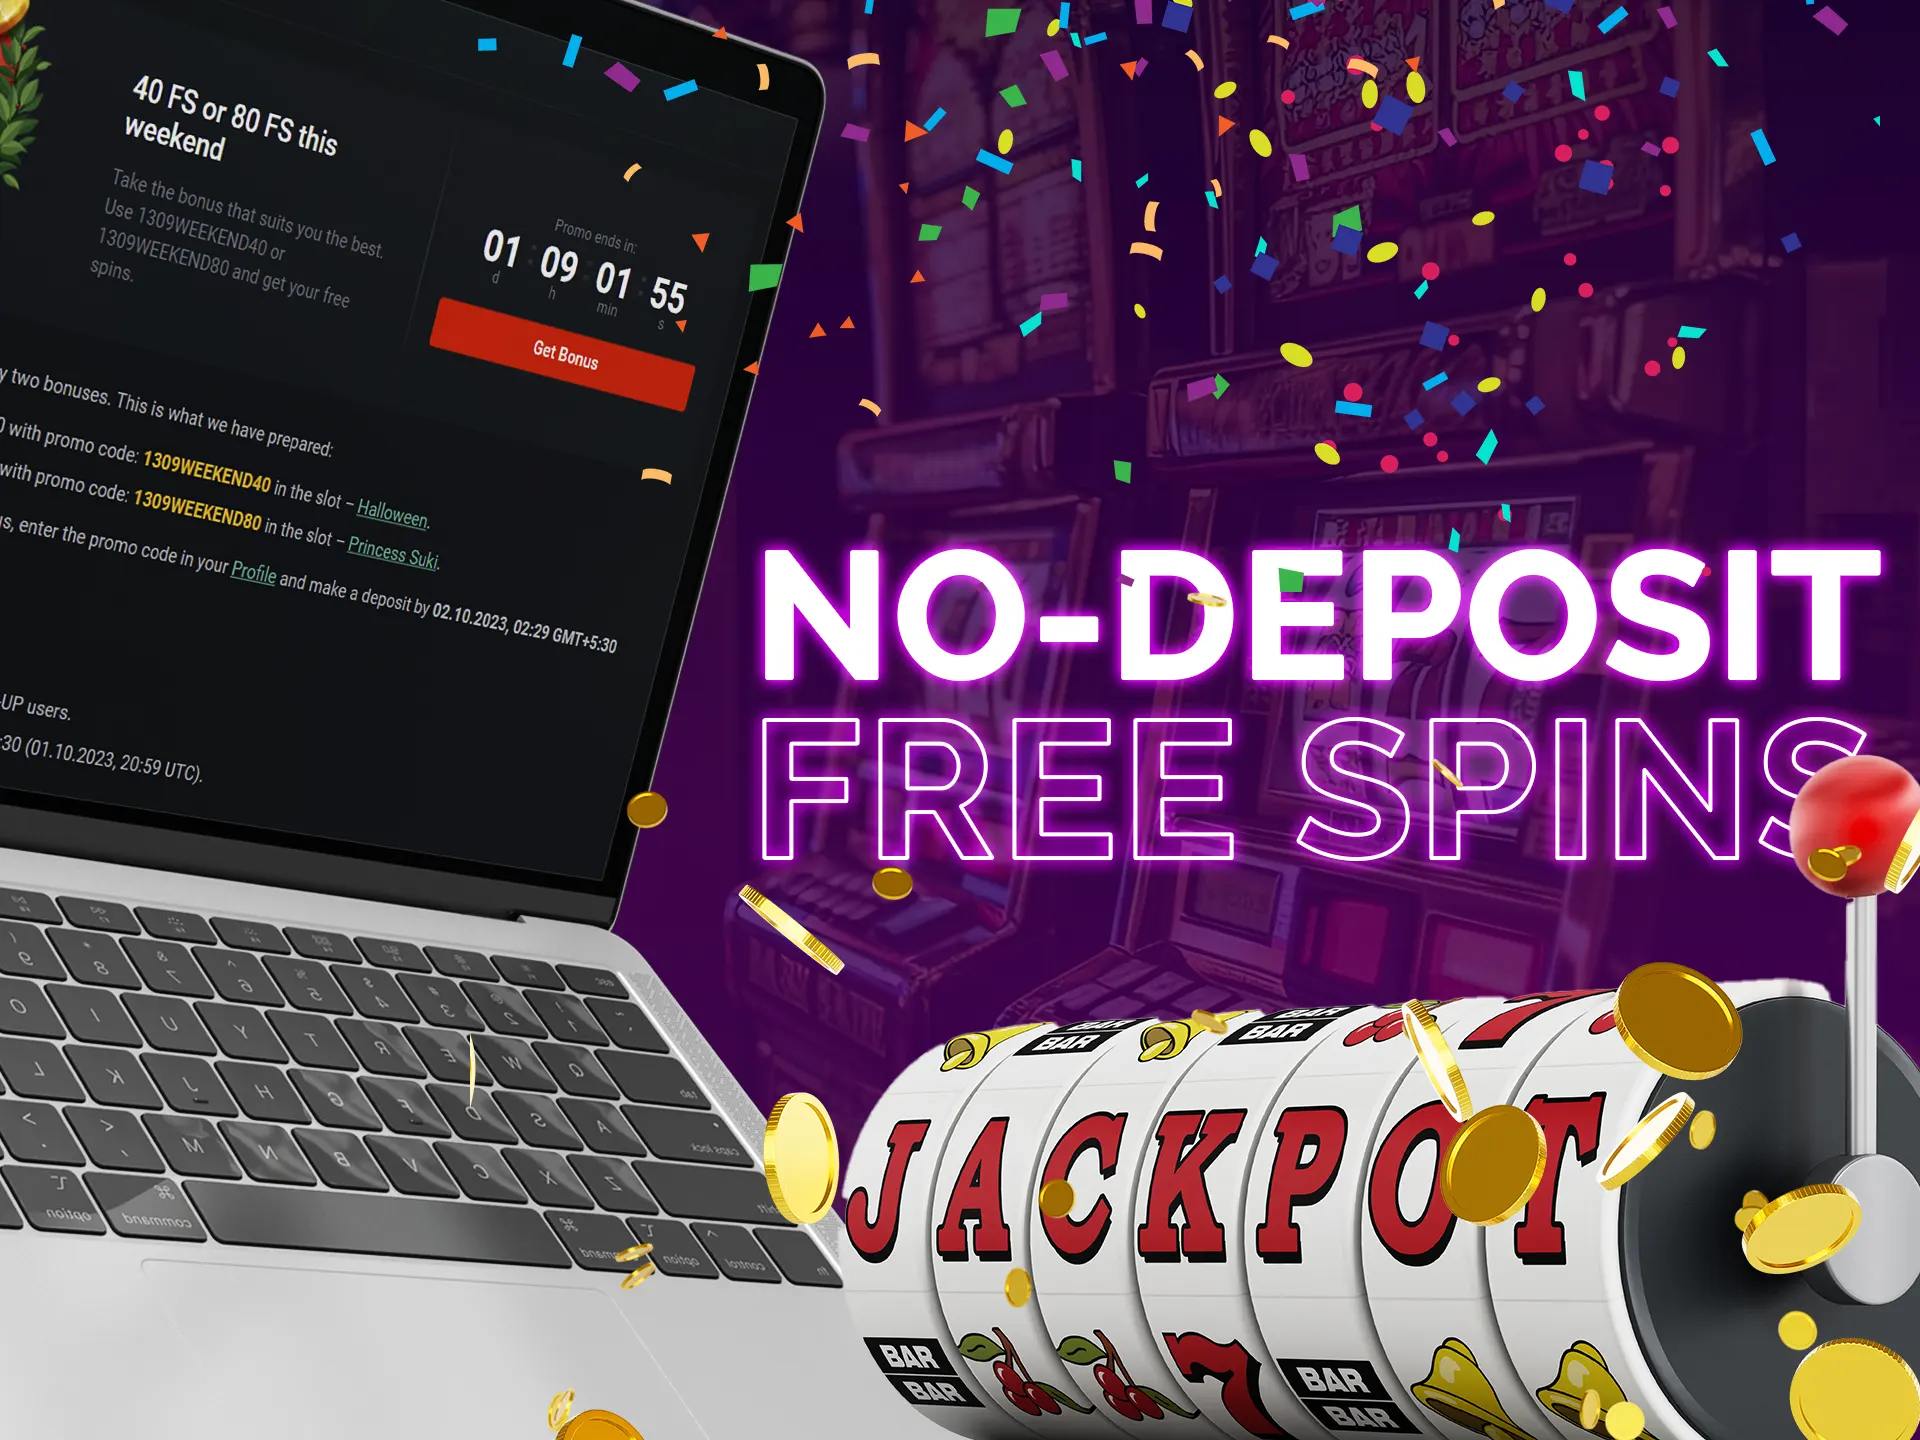 Get free spins with no-deposit bonuses.